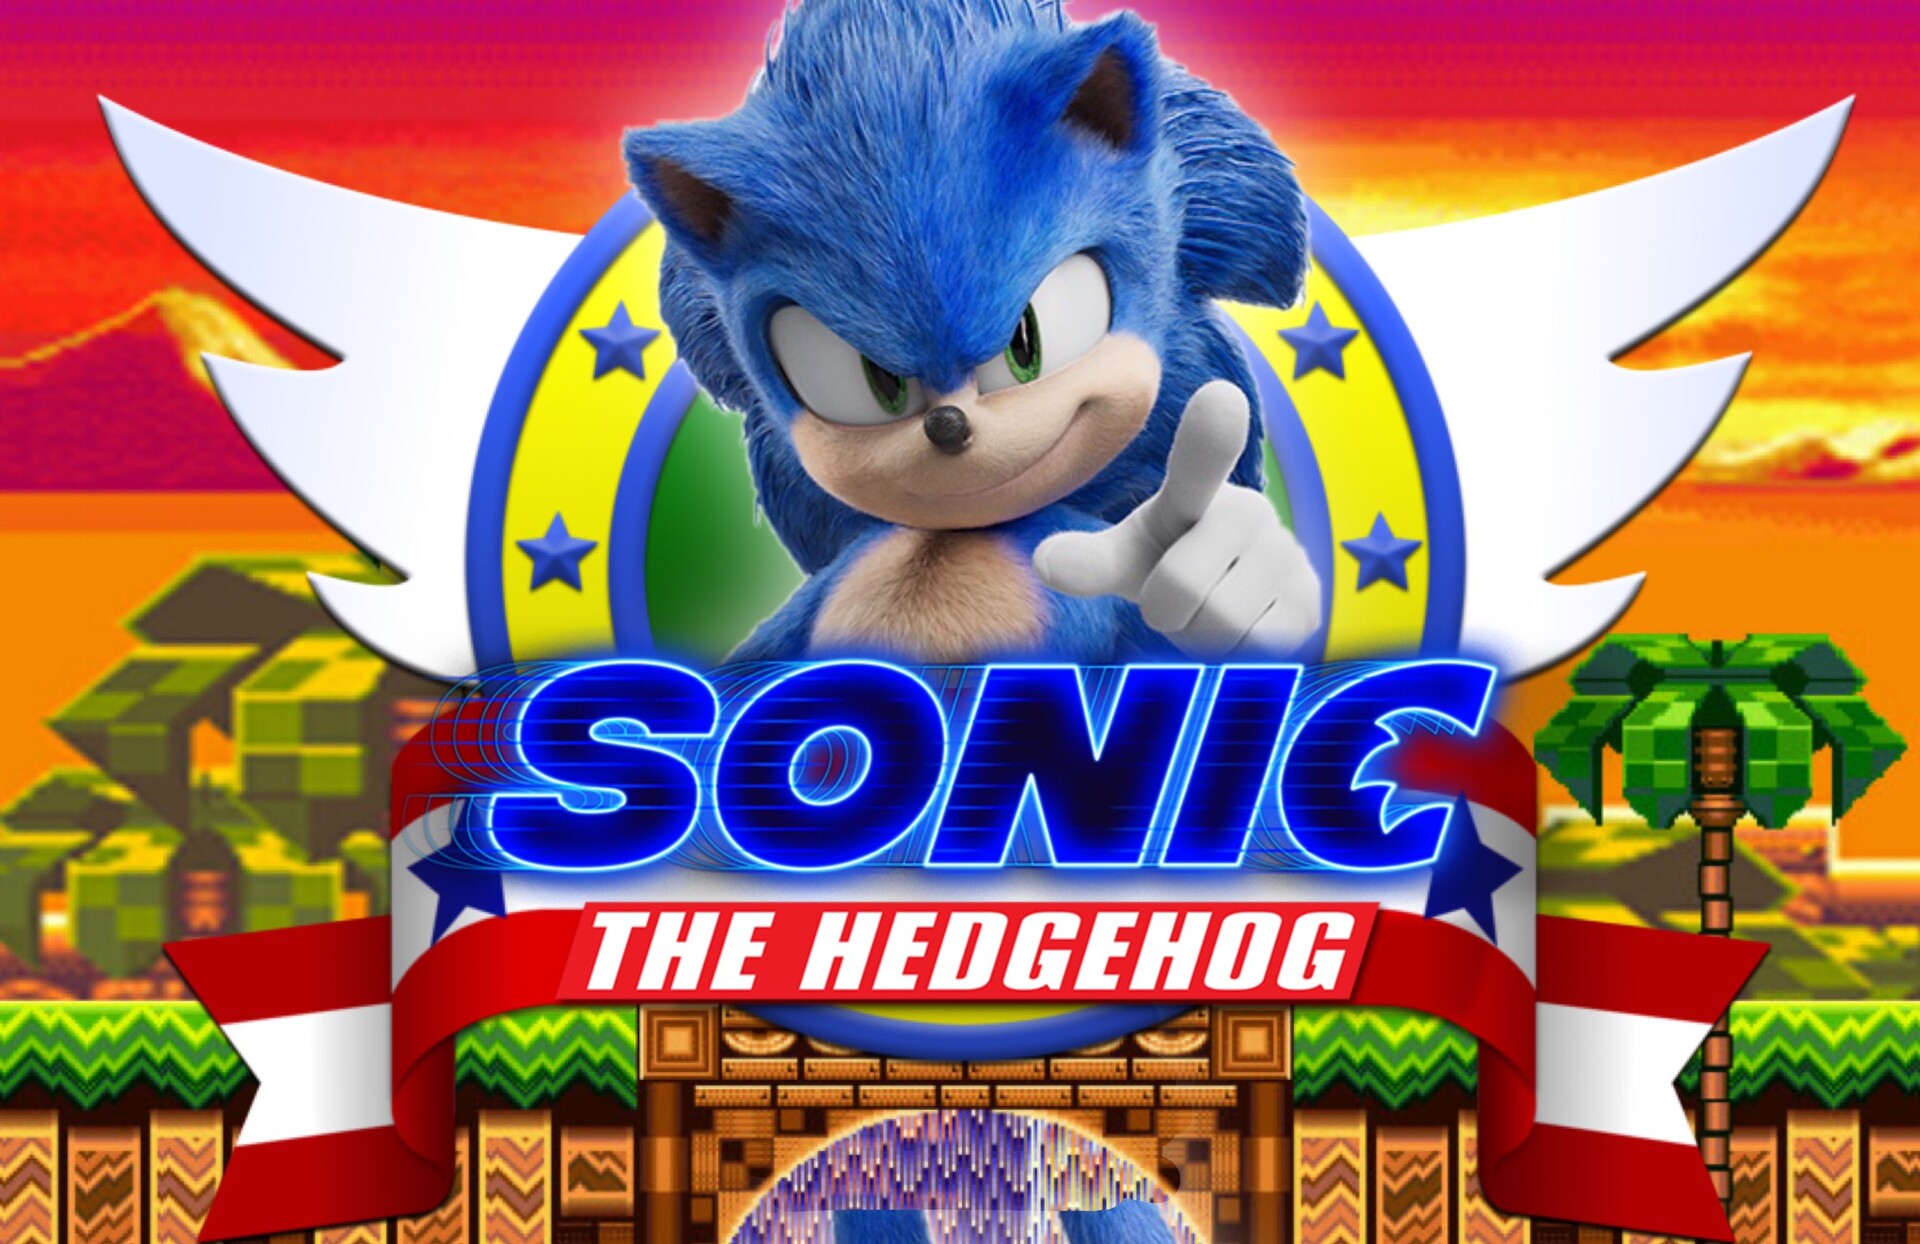 Sonic the Hedgehog 2020 Movie 4K 8K Wallpapers  HD Wallpapers  ID 30181